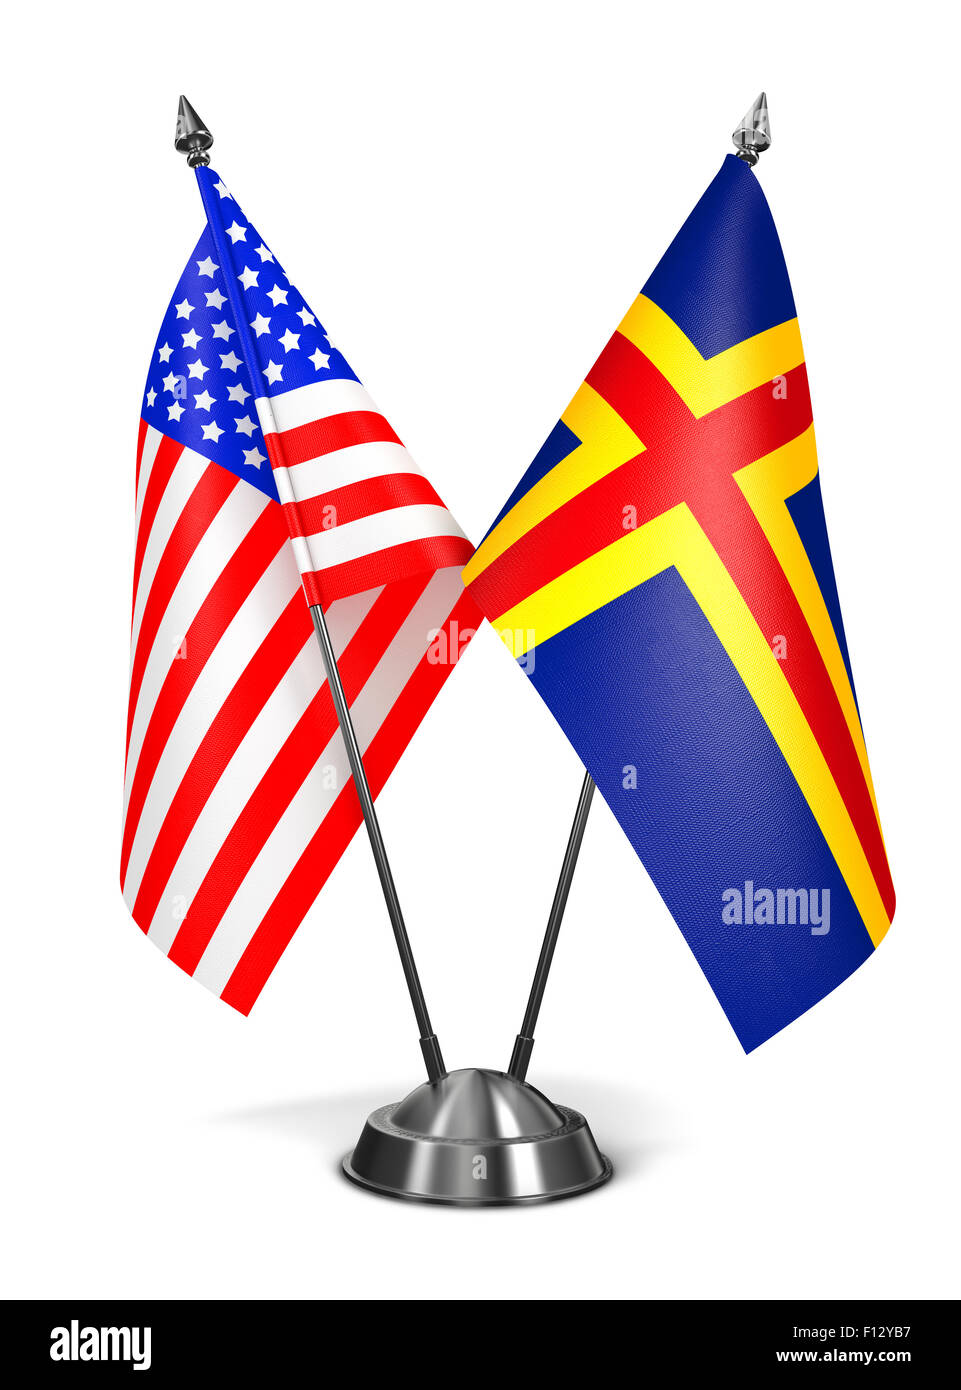 USA und Aland - Miniatur-Flags. Stockfoto